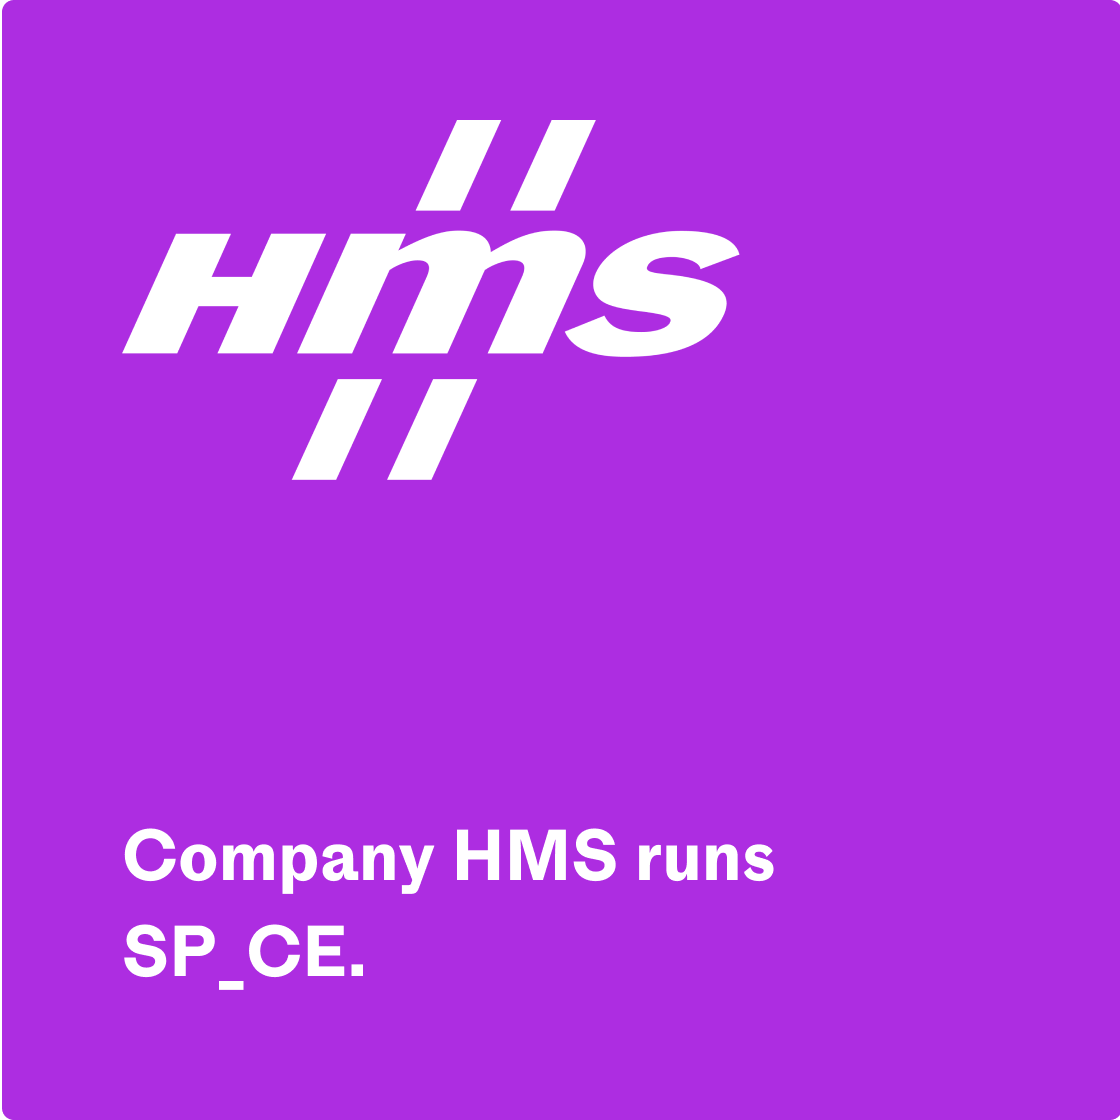 Company HMS runs SP CE.